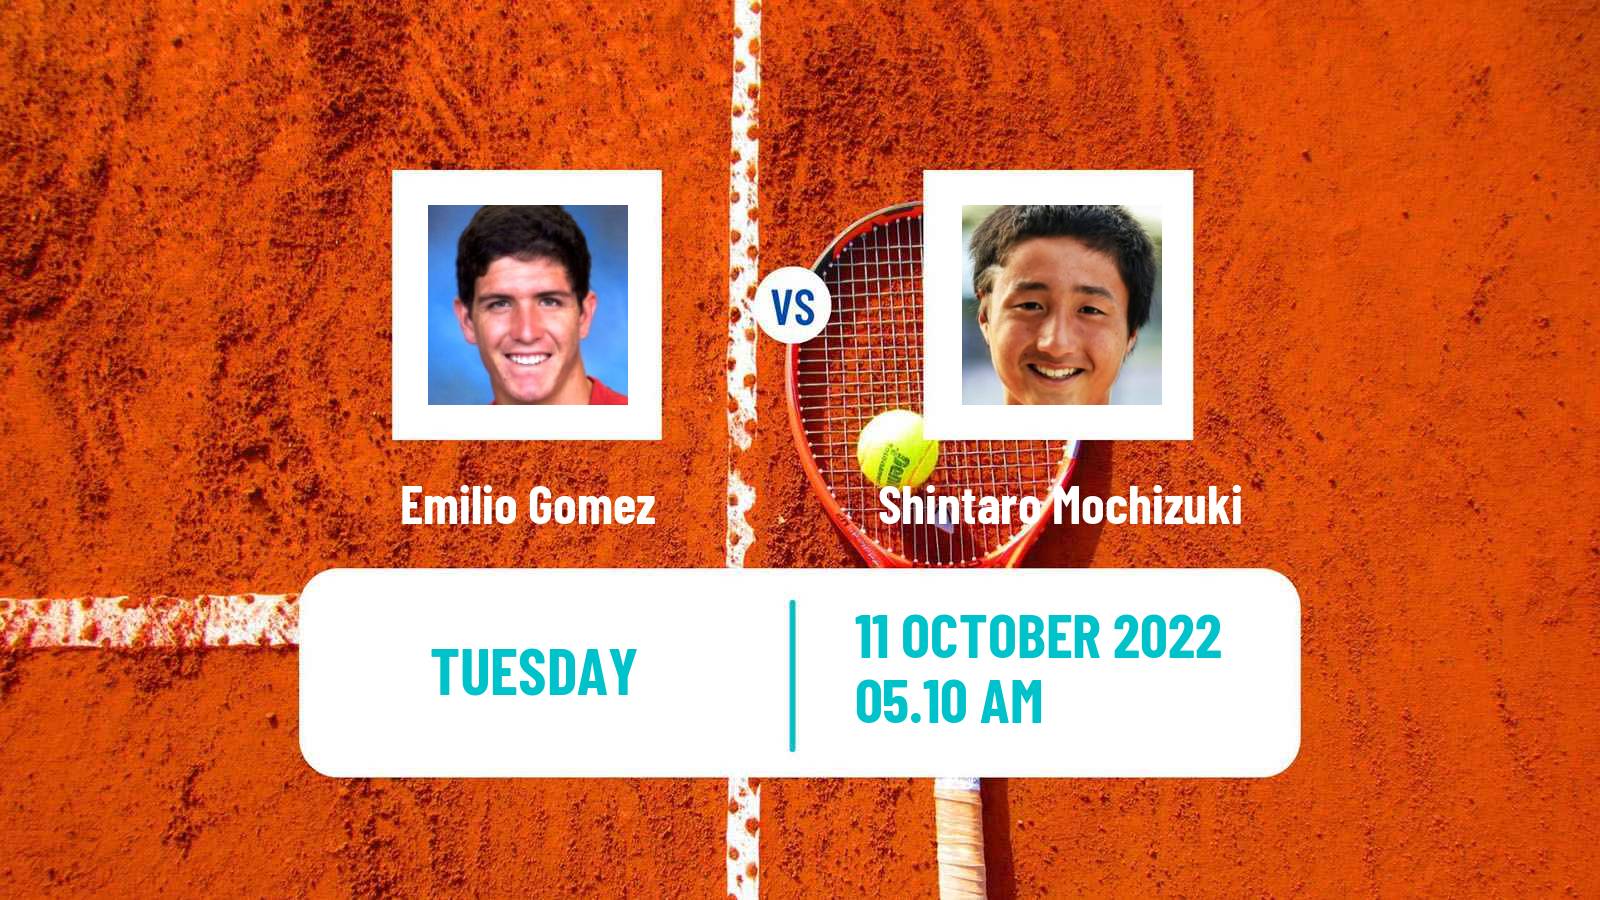 Tennis ATP Challenger Emilio Gomez - Shintaro Mochizuki